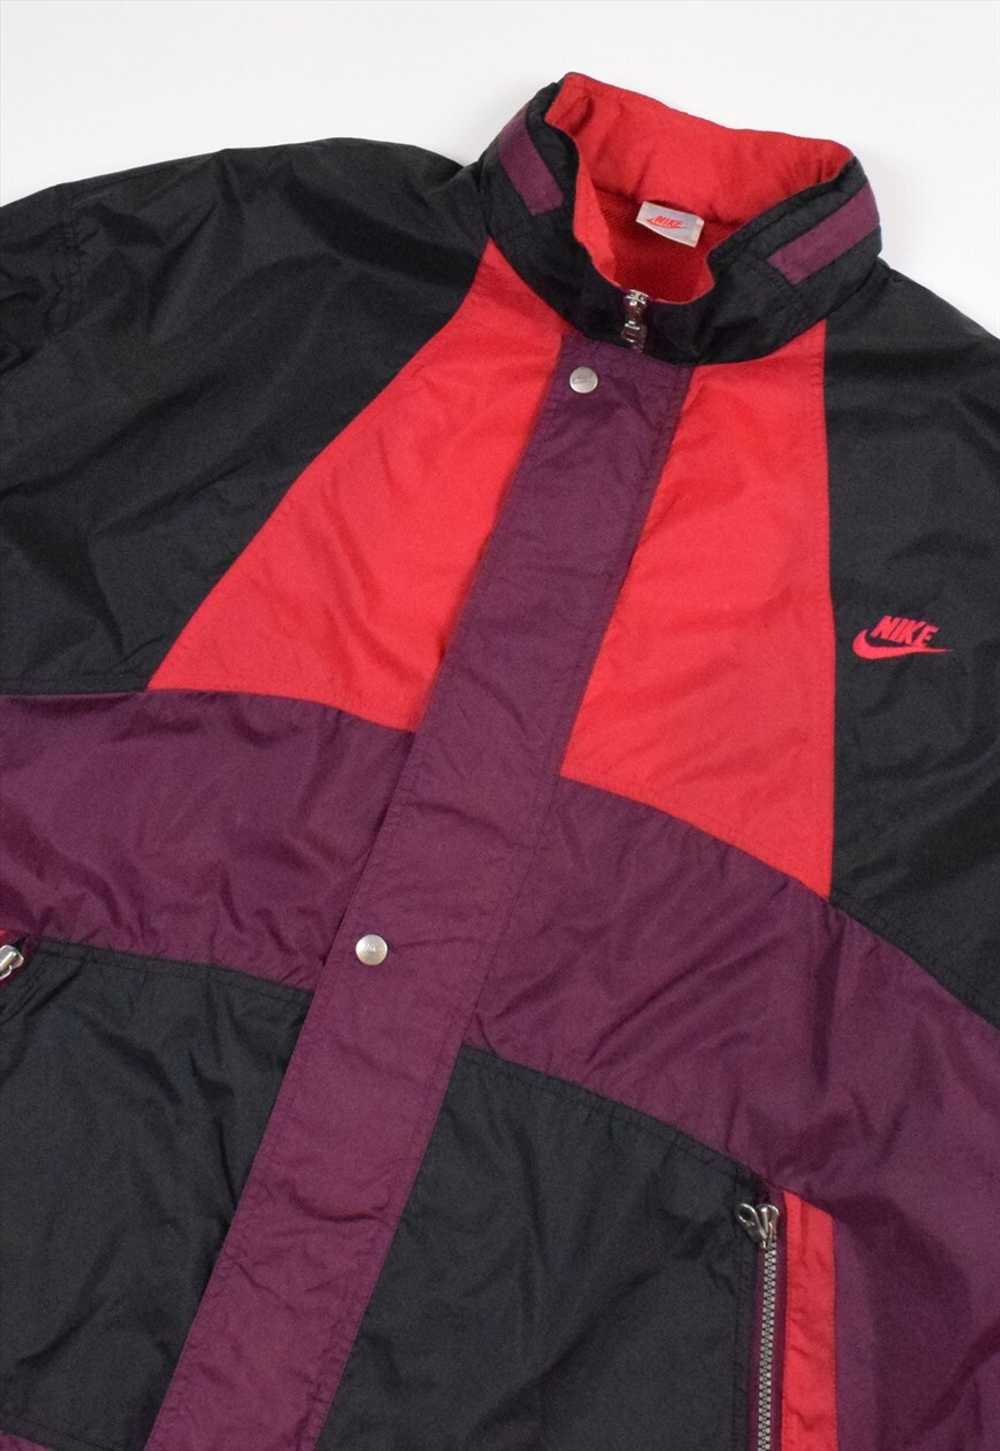 Vintage 90s Nike Colour Block Windbreaker Jacket - image 2